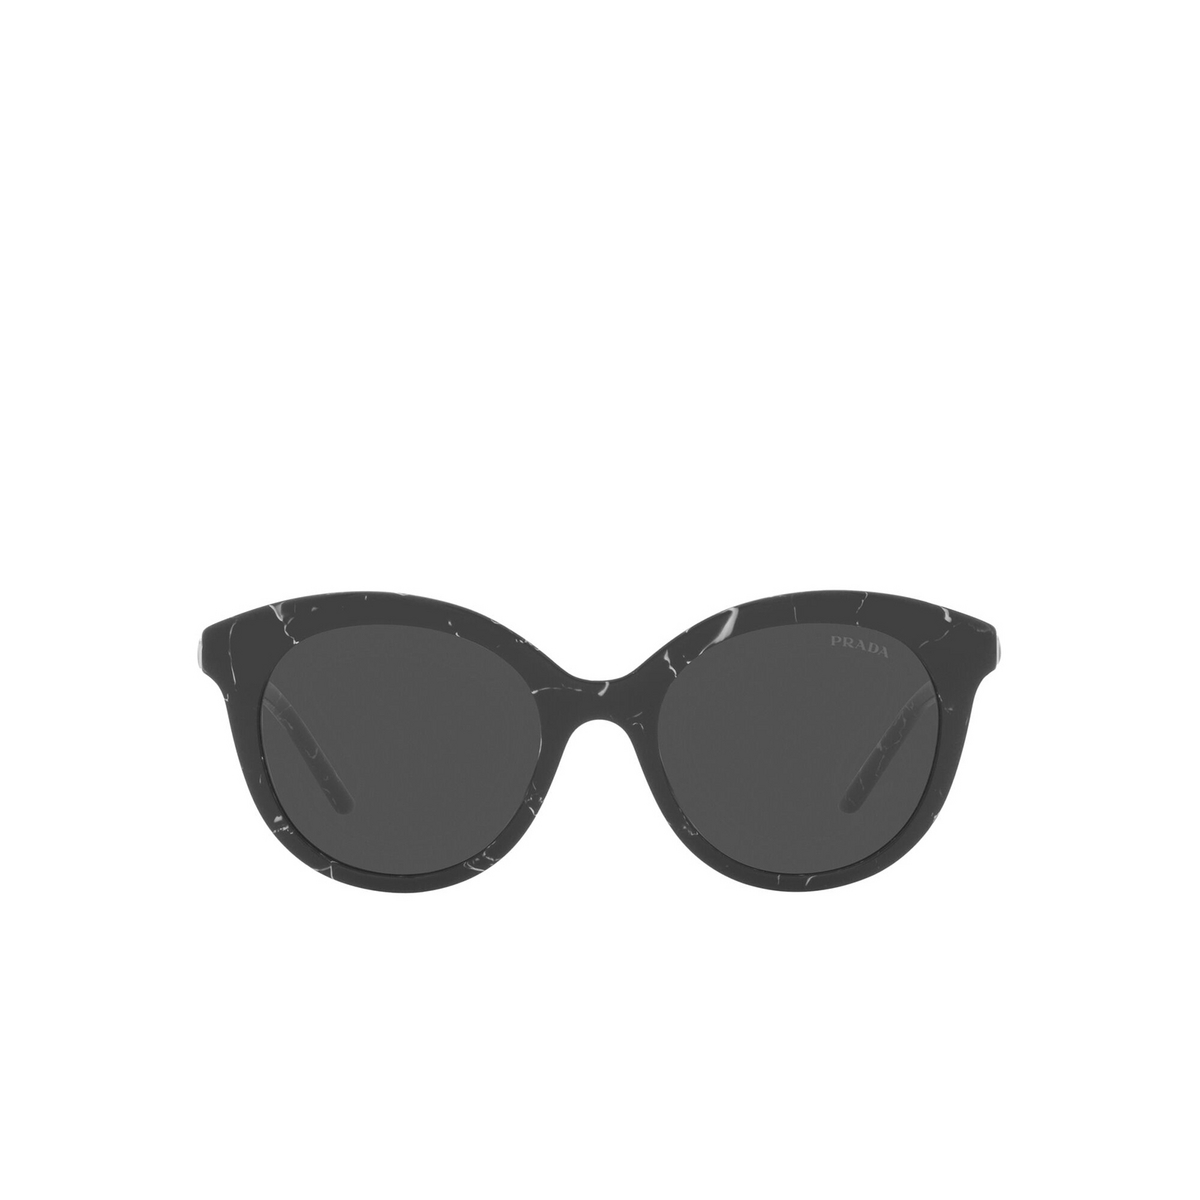 Prada® Round Sunglasses: PR 02YS color Black Marble 03Y5S0 - front view.